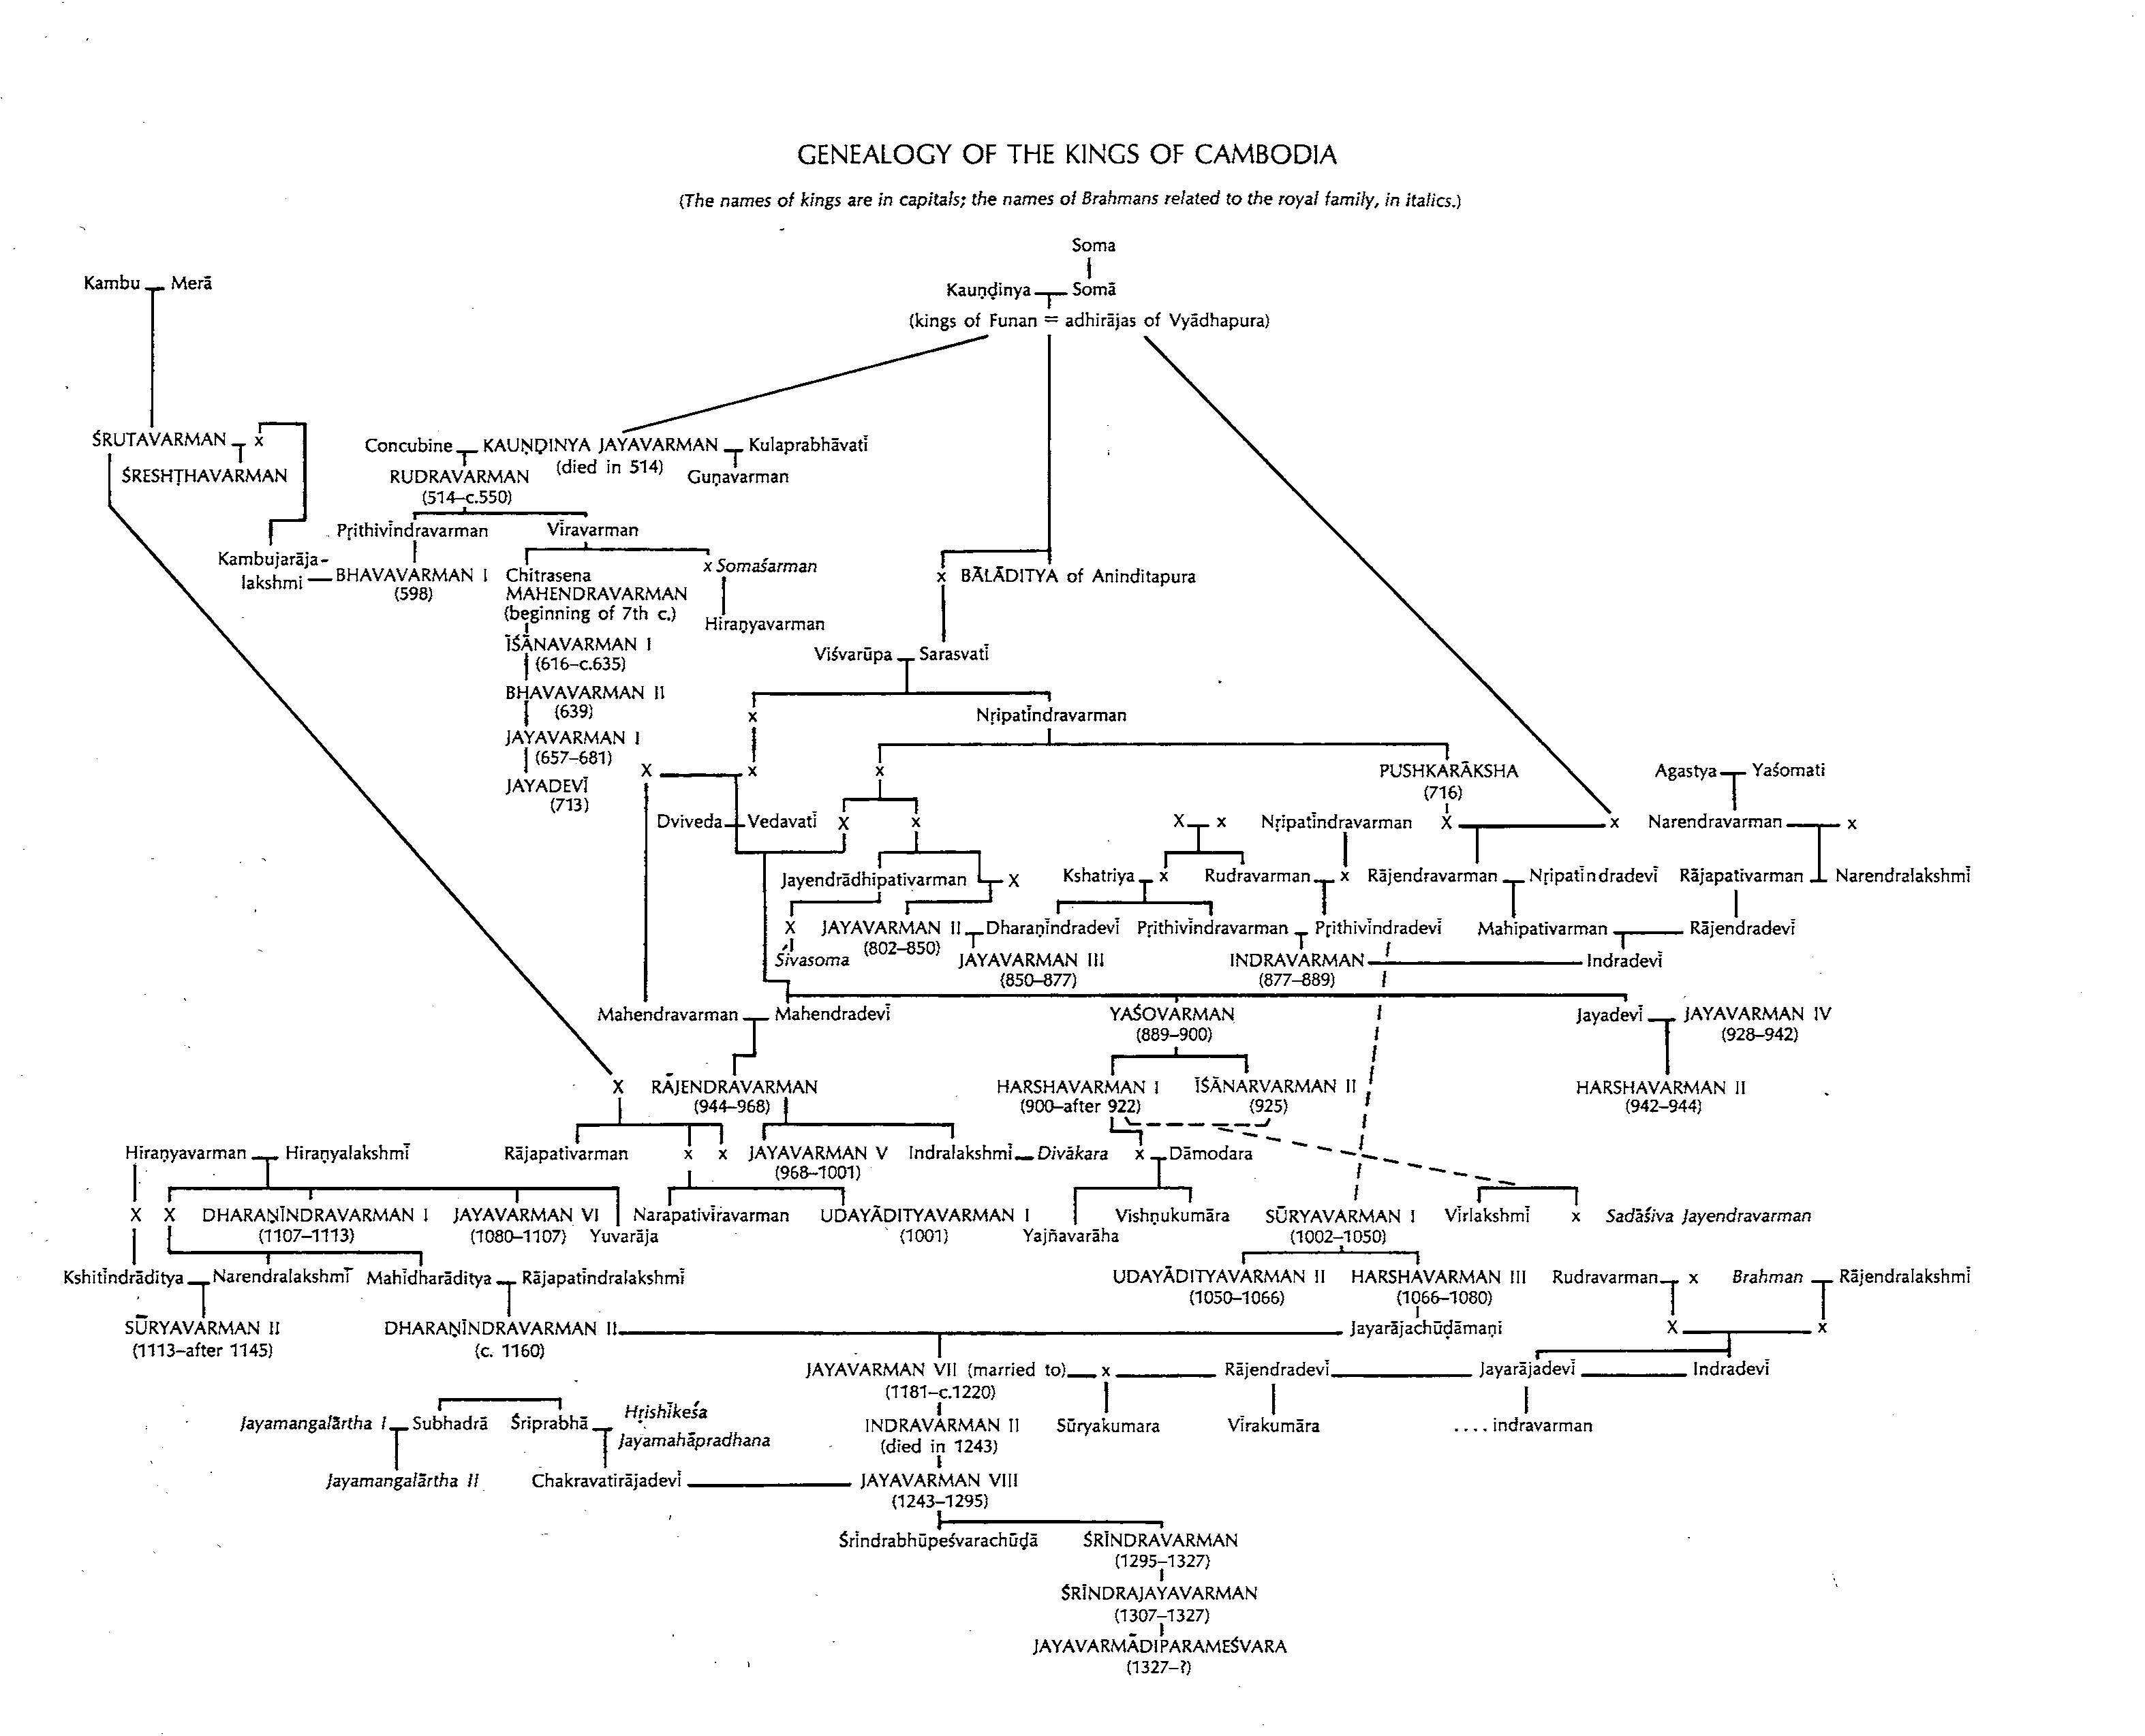 genealogy-kings-cambodia-coedes.jpg#asset:6310